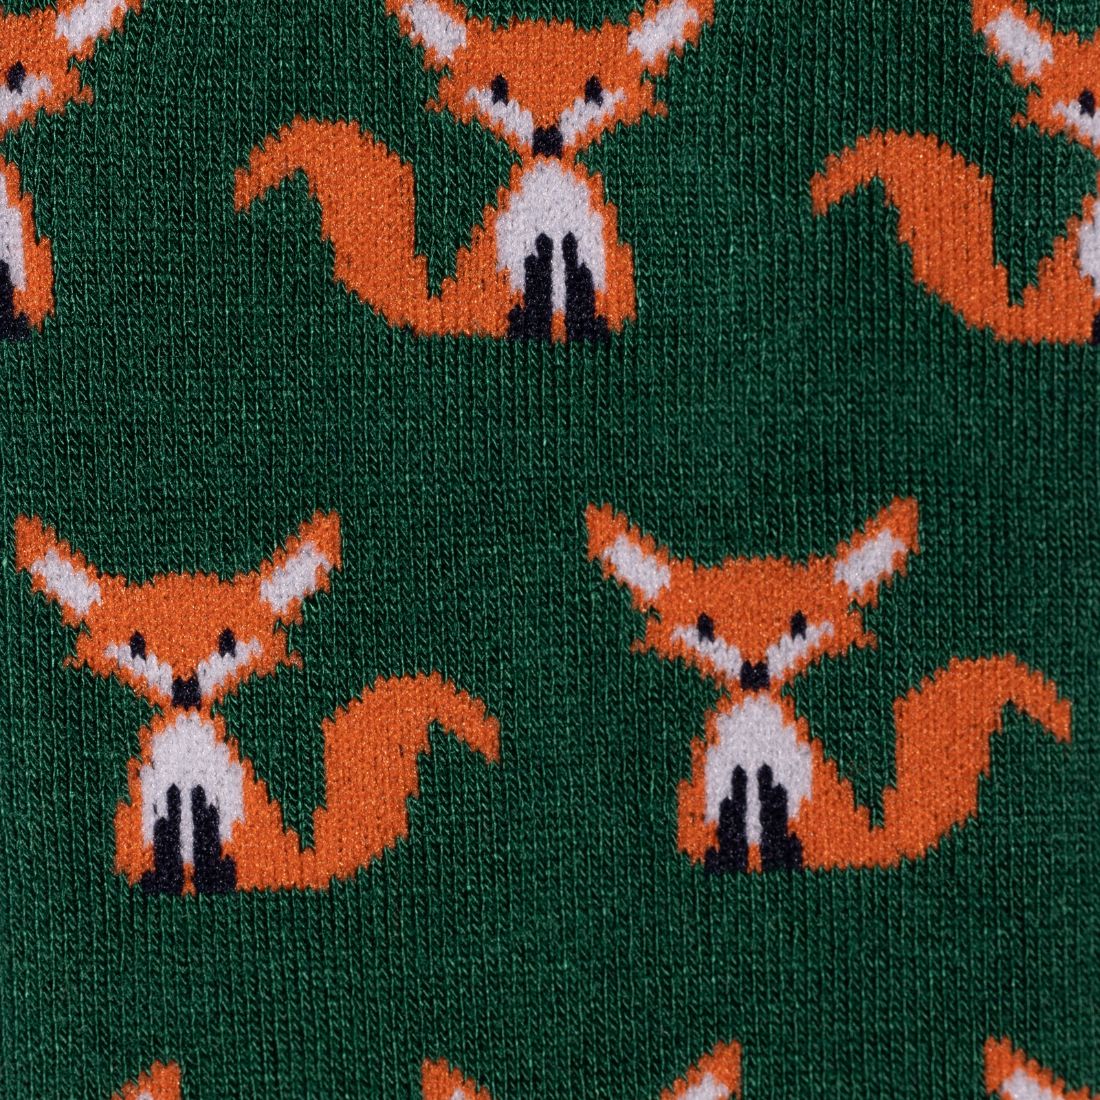 Mr Fox Bamboo Socks (His)